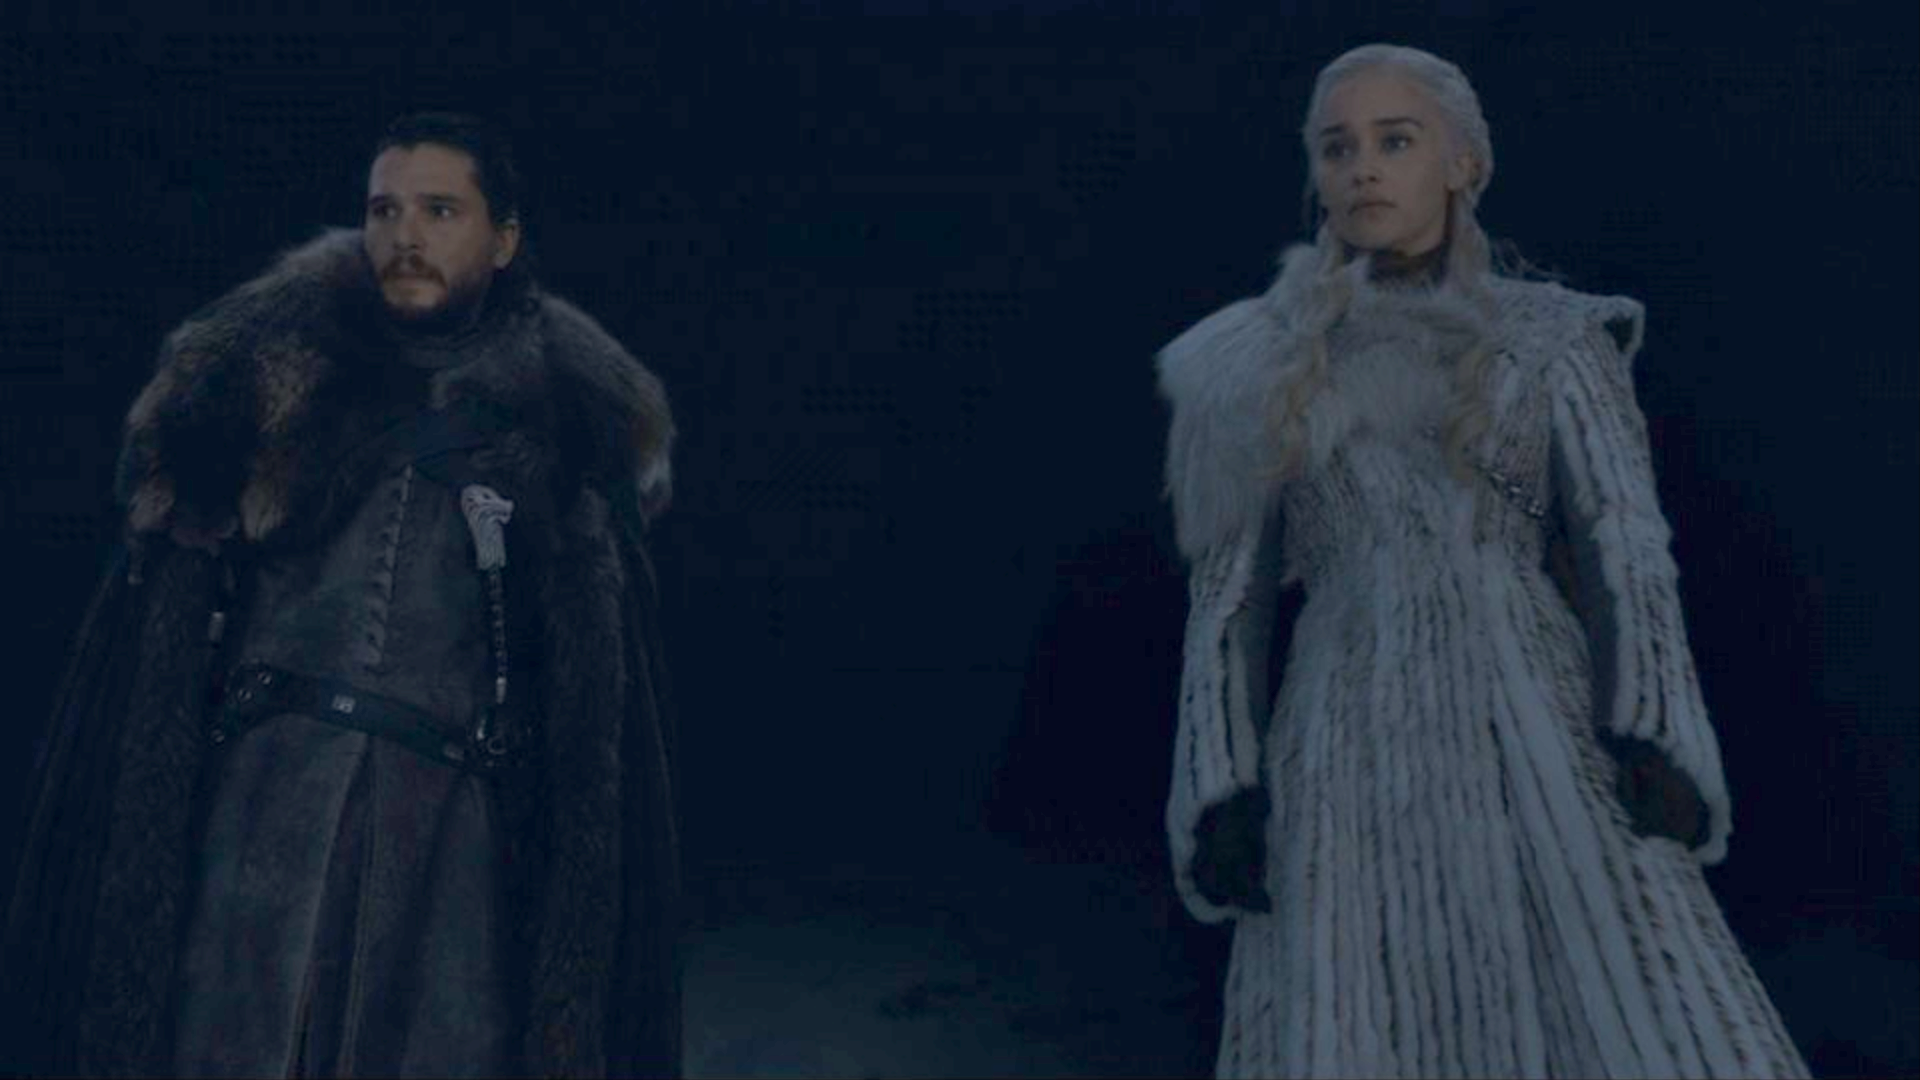 Jon Snow and Daenerys Targaryen standing on a hill at night